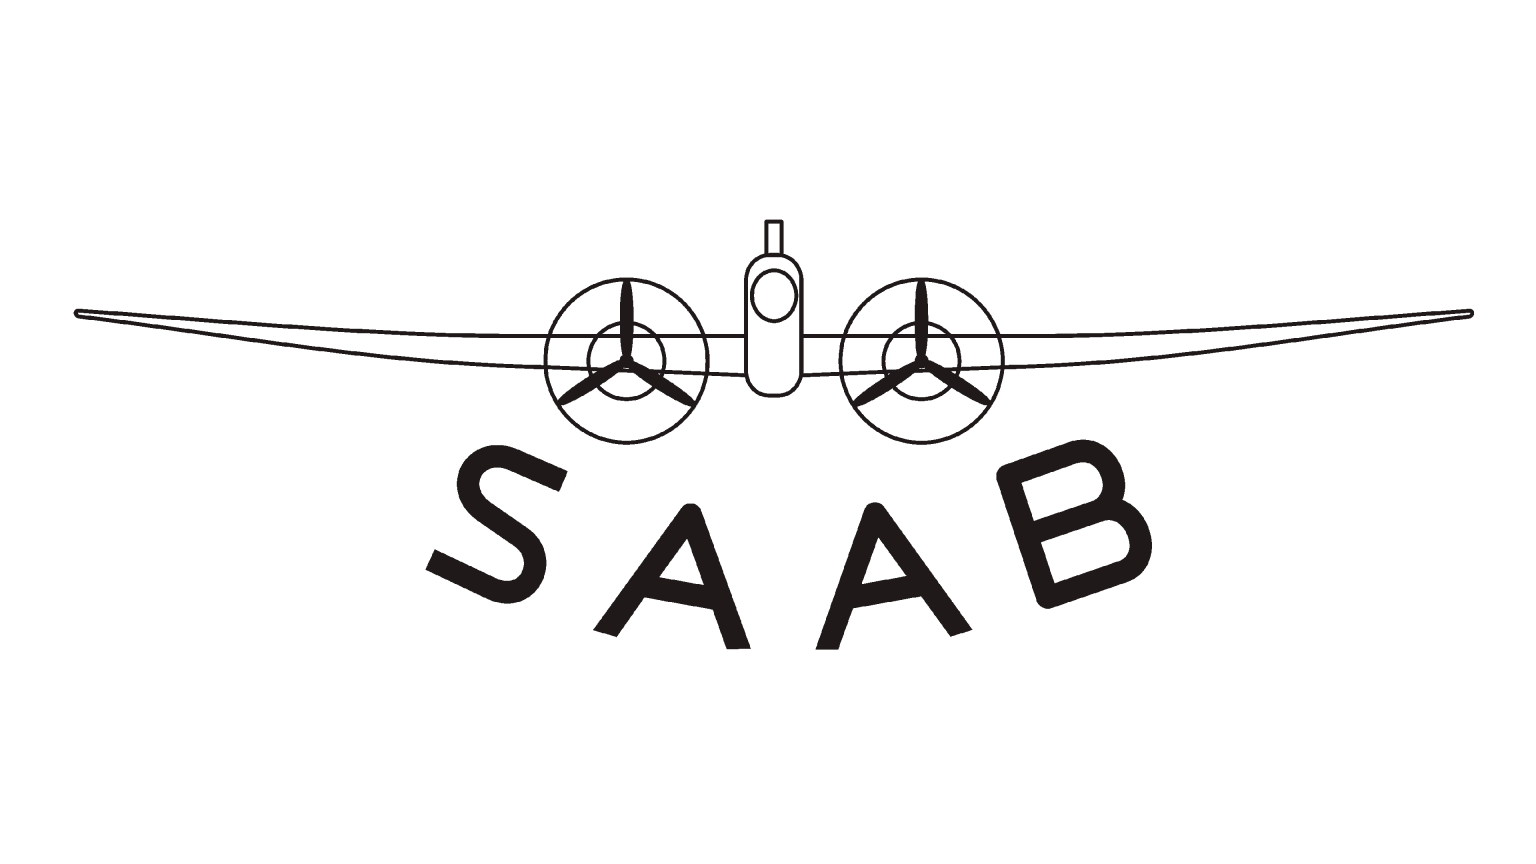 Saab Logo and Car Symbol Meaning